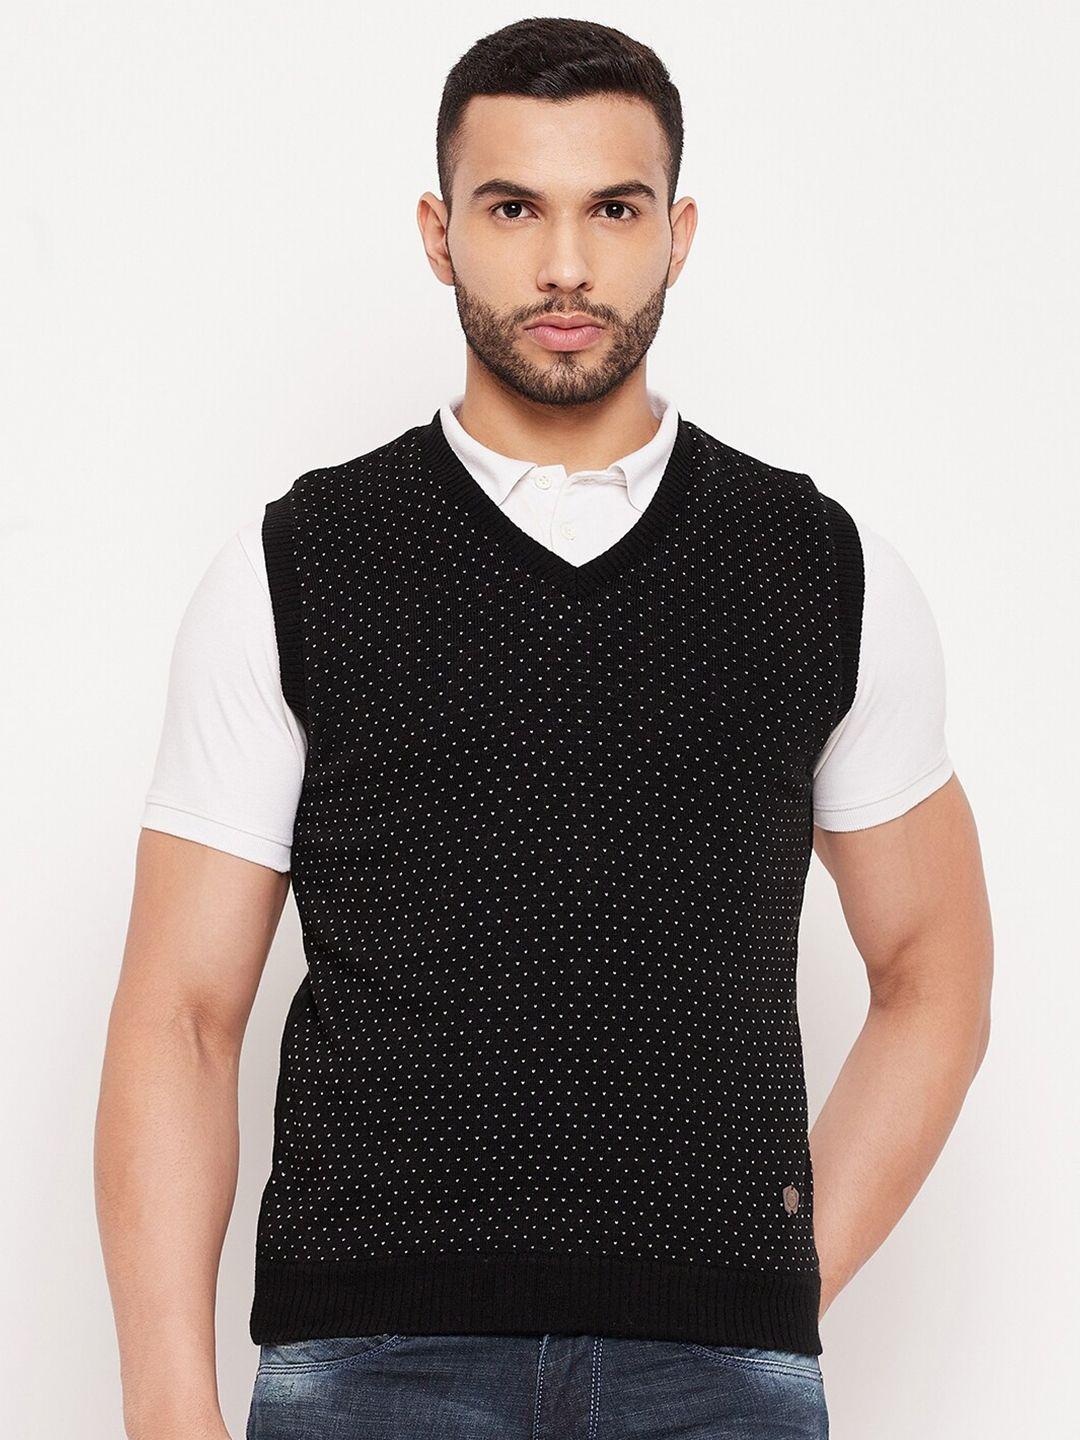 duke-men-black-&-white-geometric-printed-sweater-vest